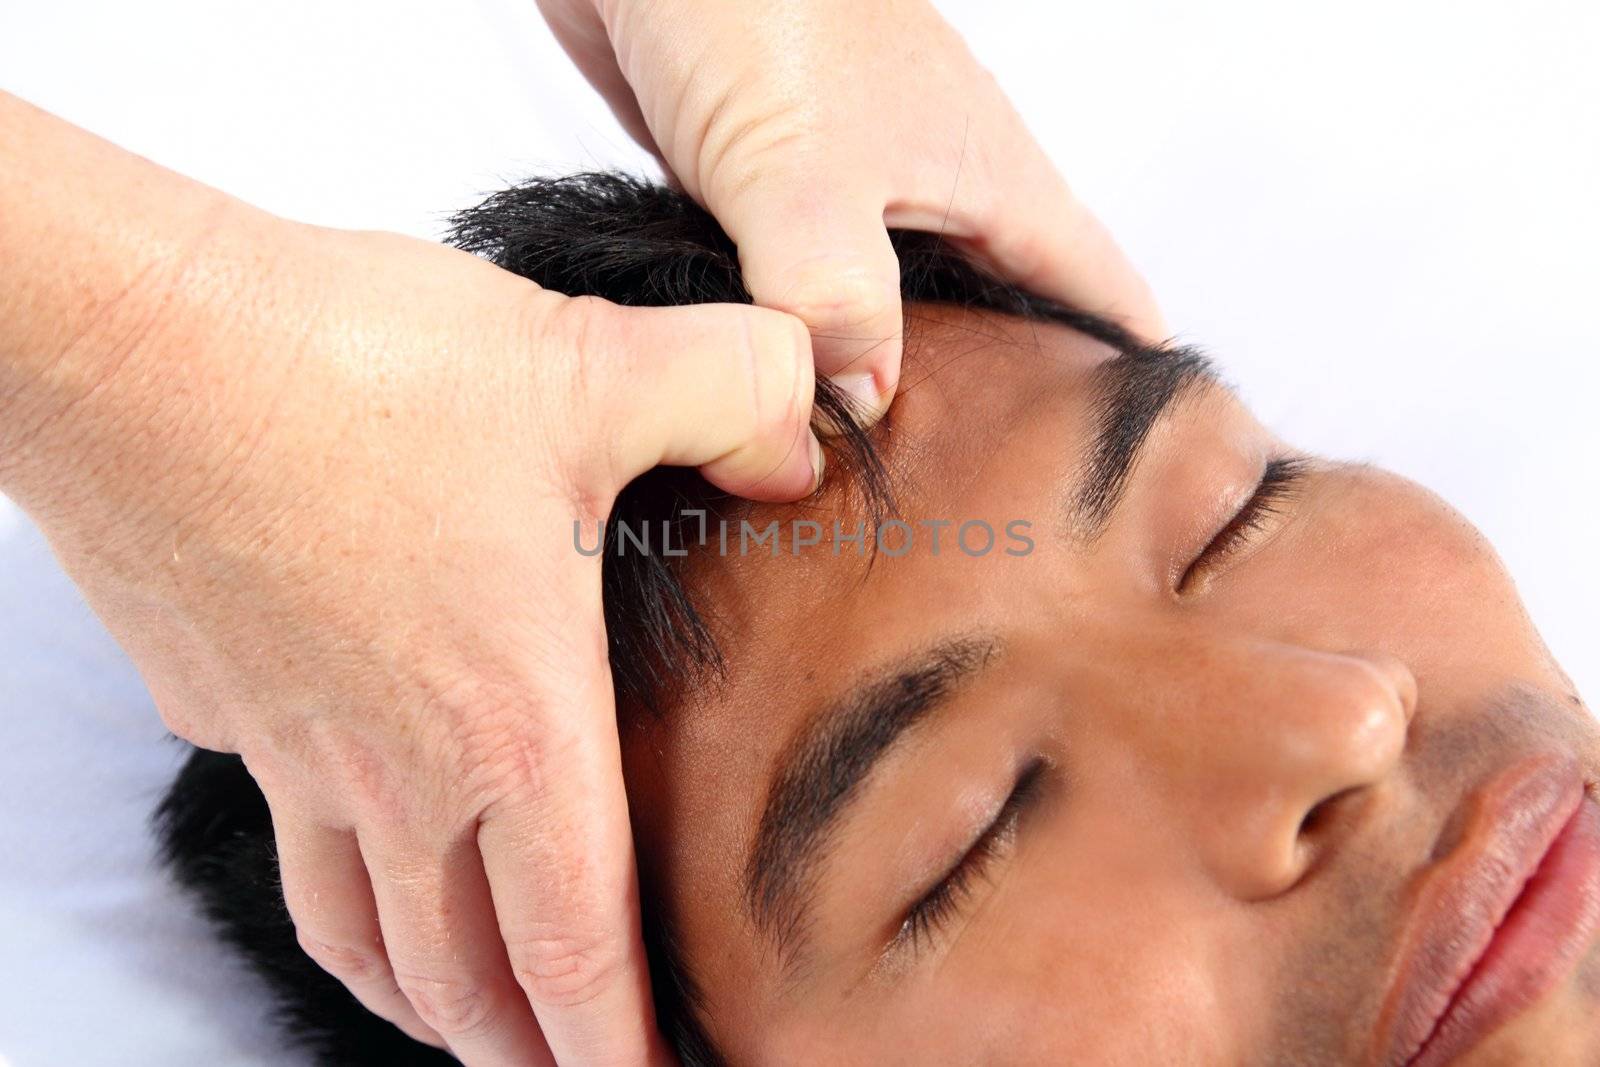 chakras third eye massage ancient Maya therapy central America shiatsu